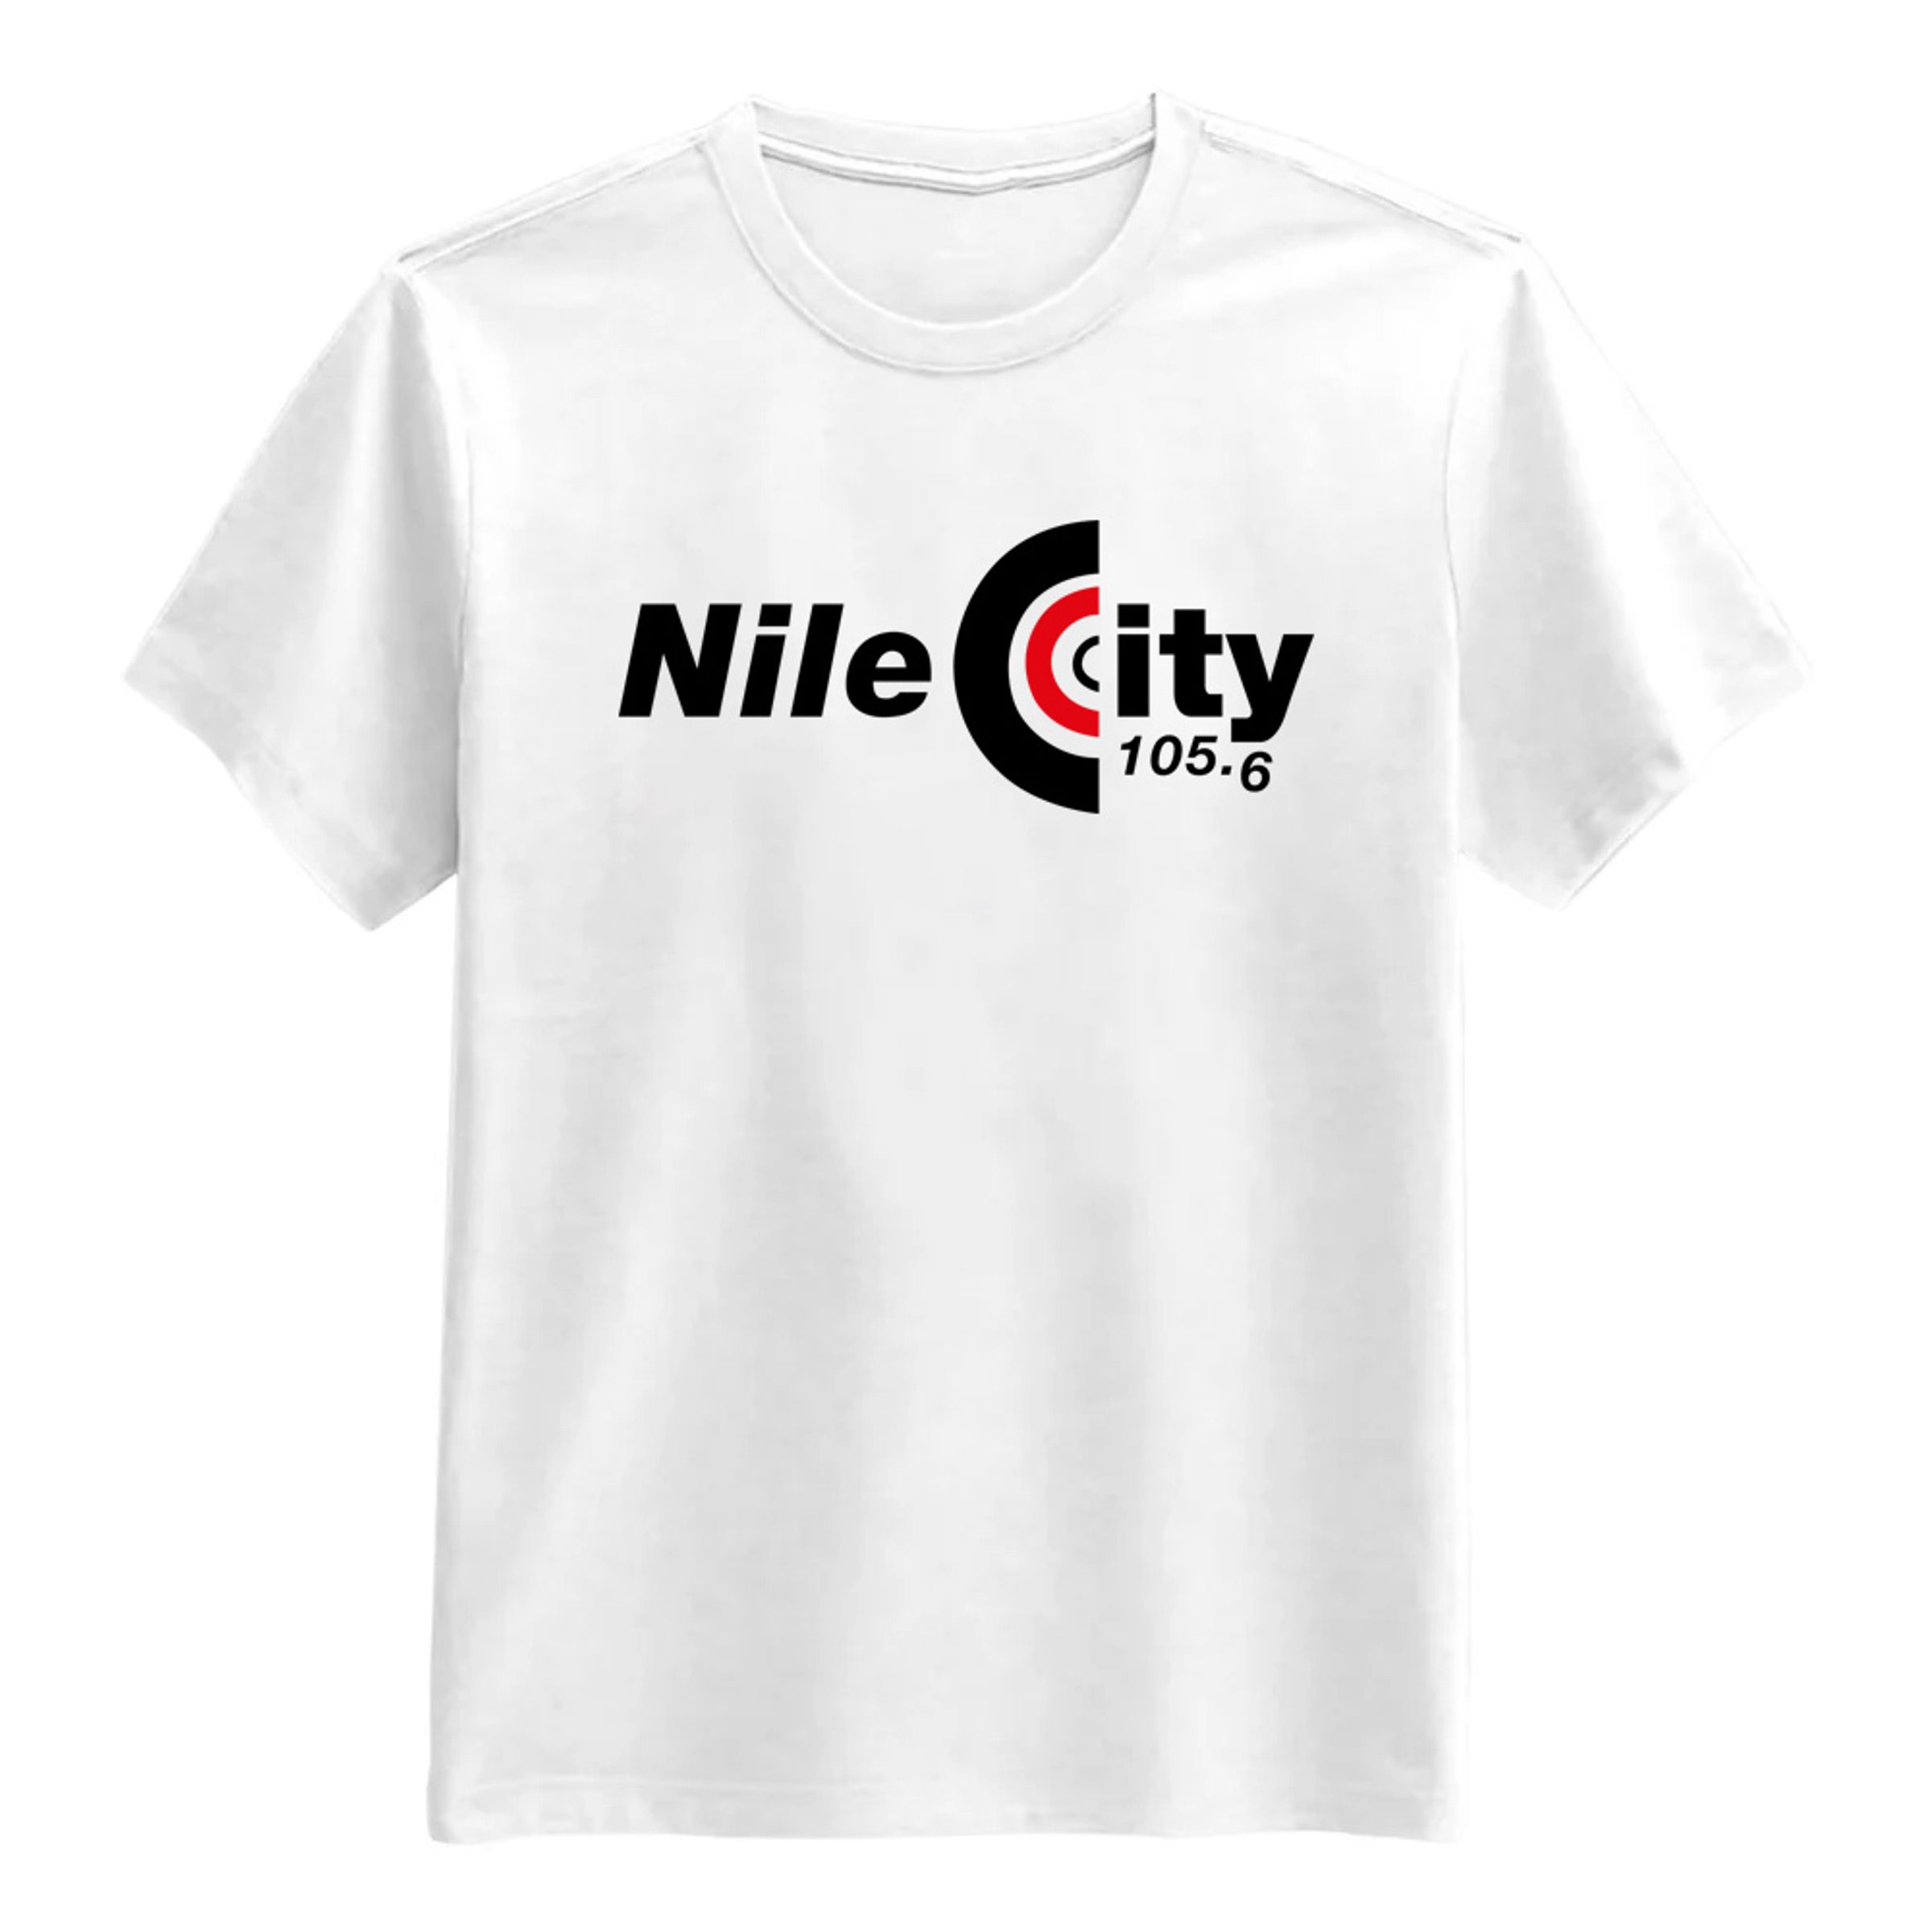 Nile City T-Shirt - X-Large